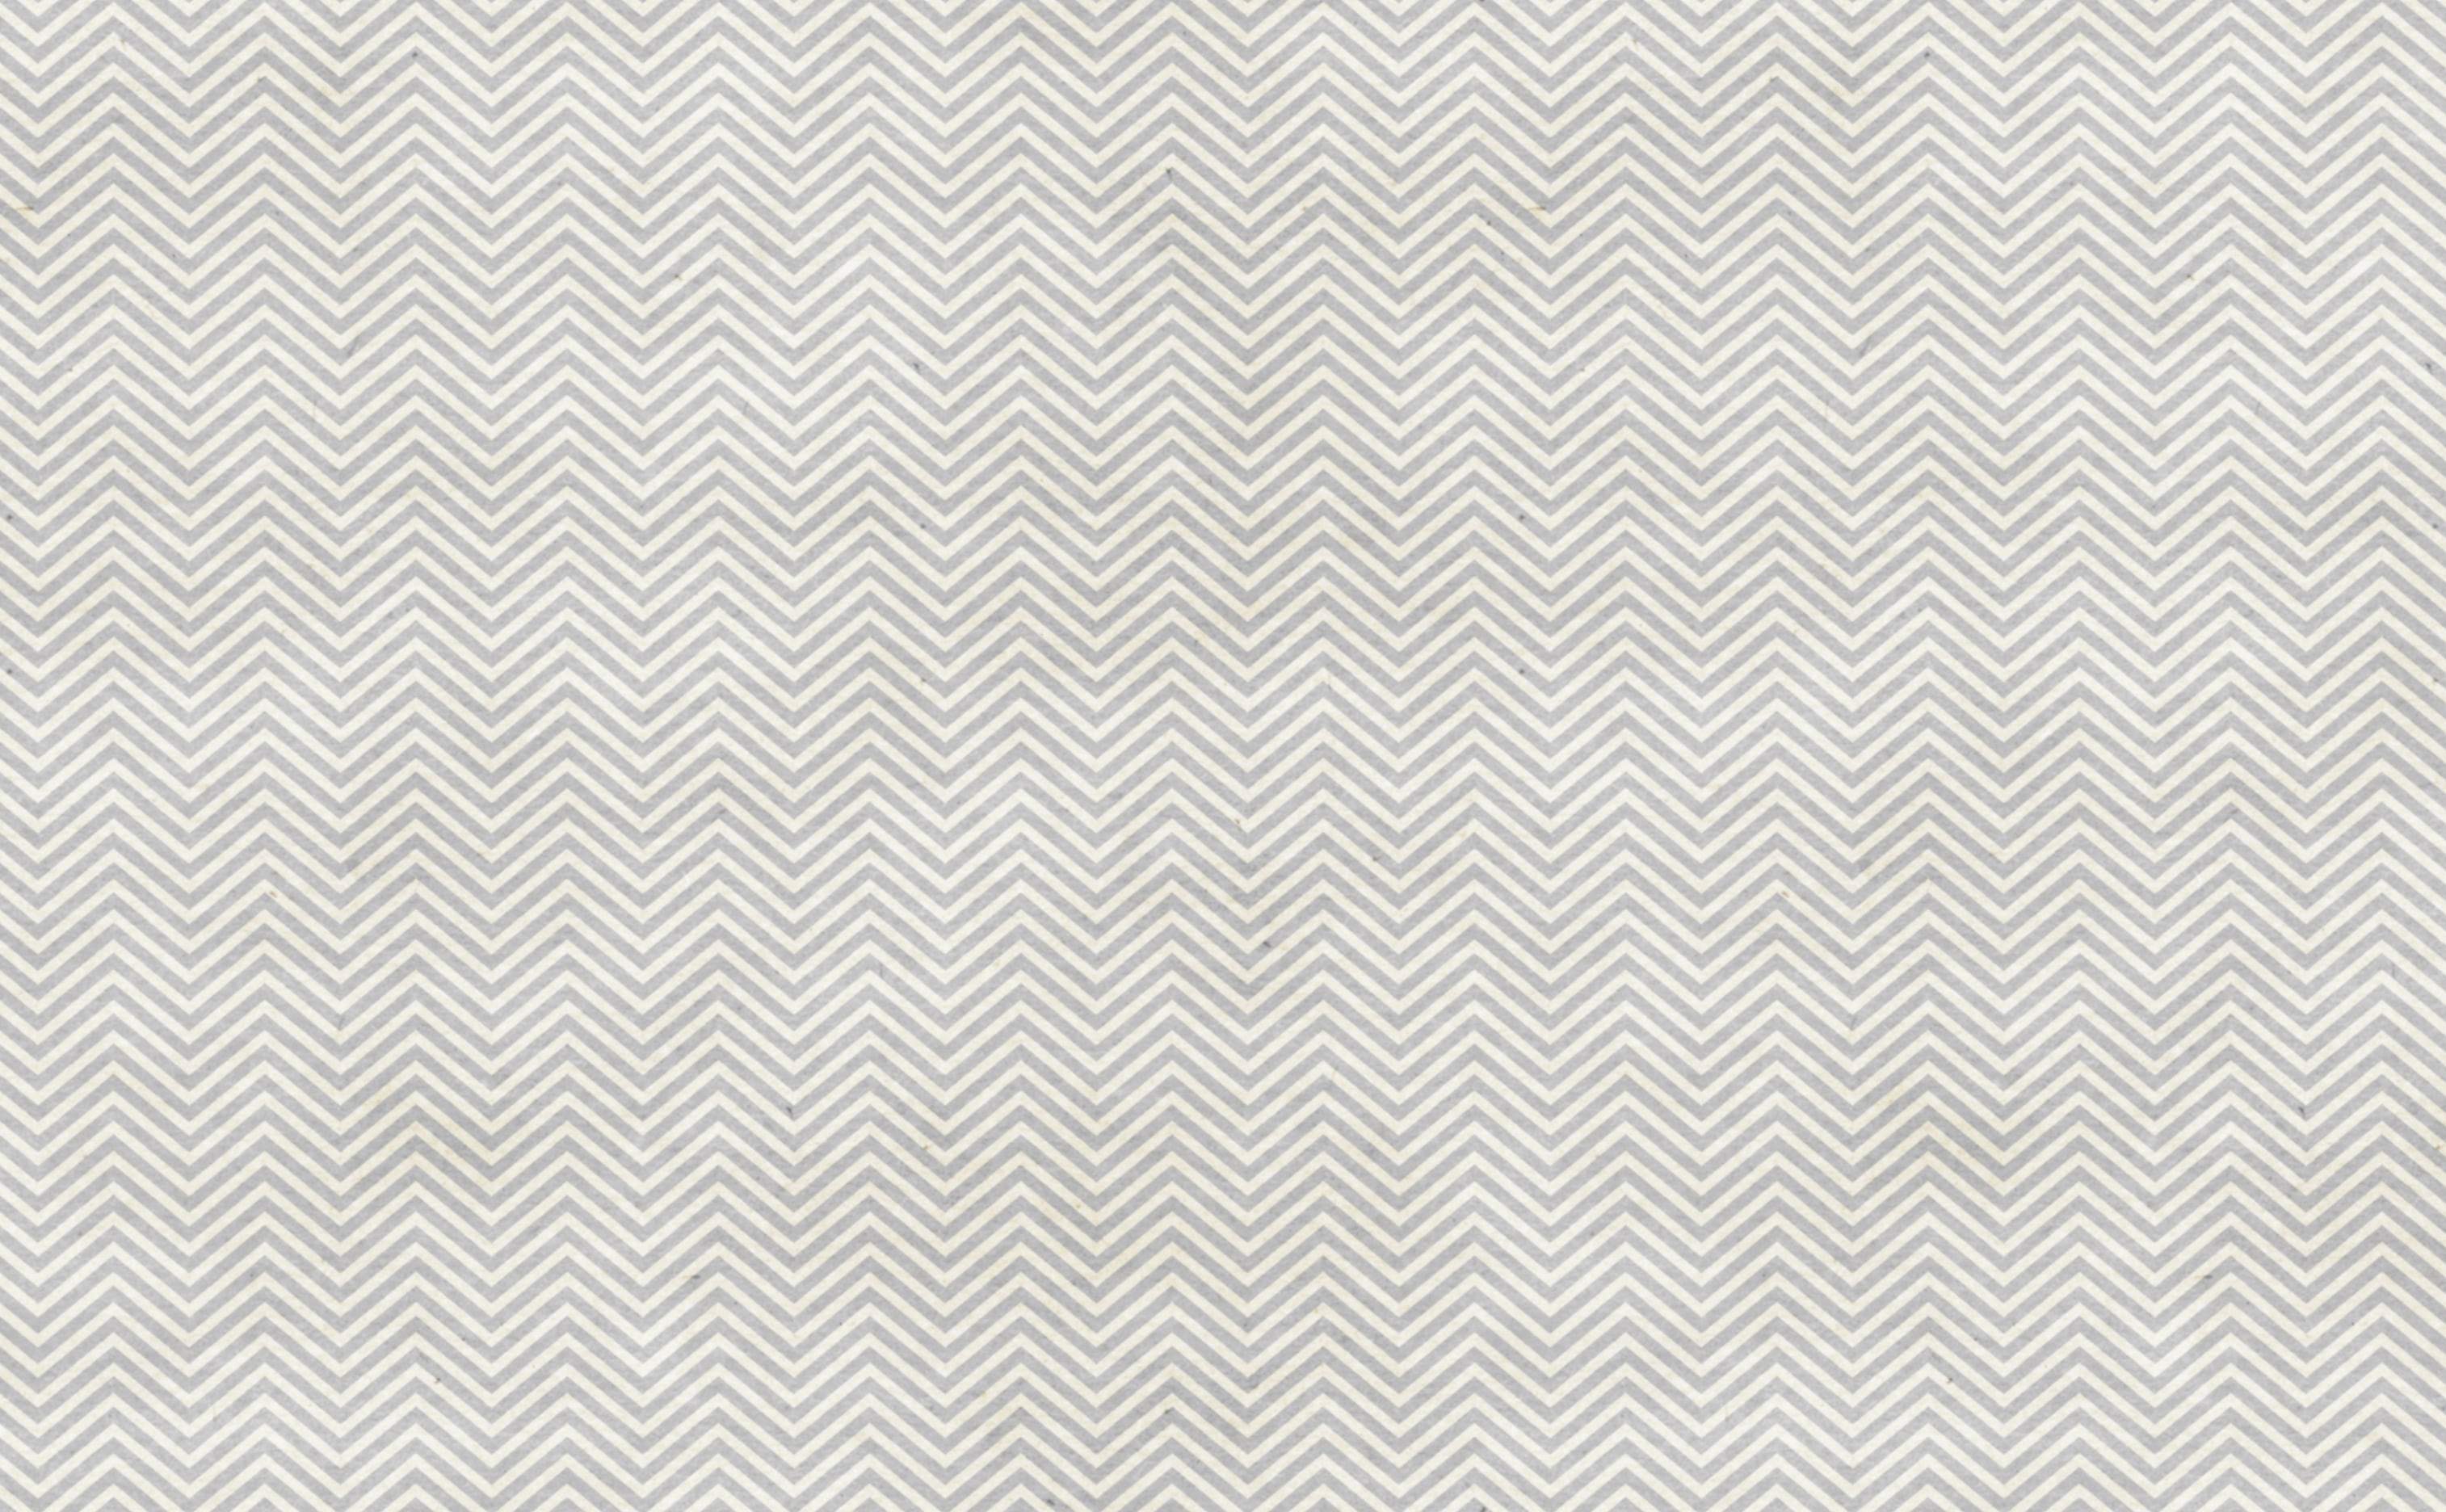 Fine Grey Chevron Zen Wallpaper Collection Wallsneedlove